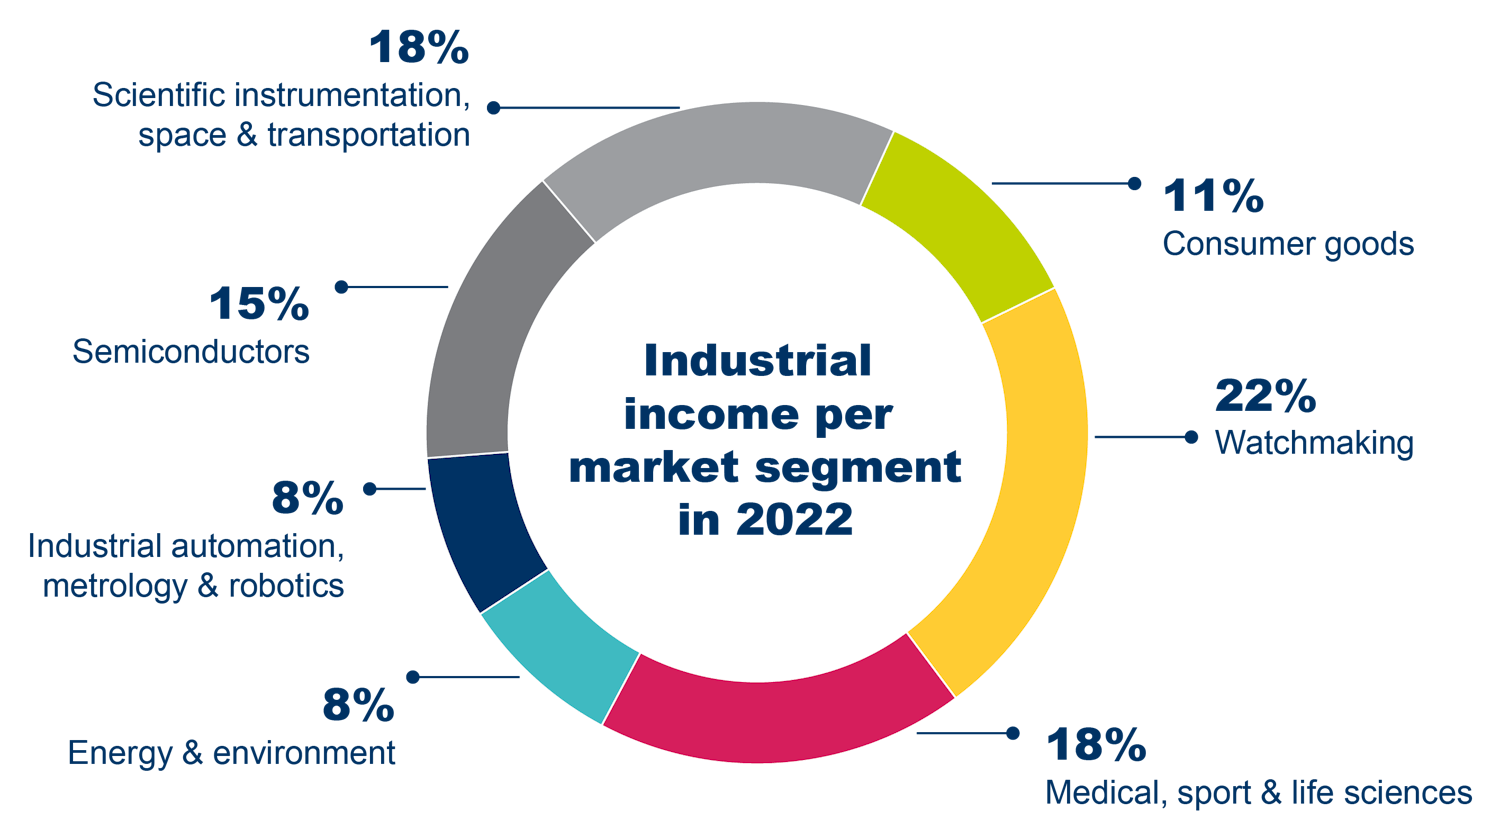 CSEM's Industrial income per market segment